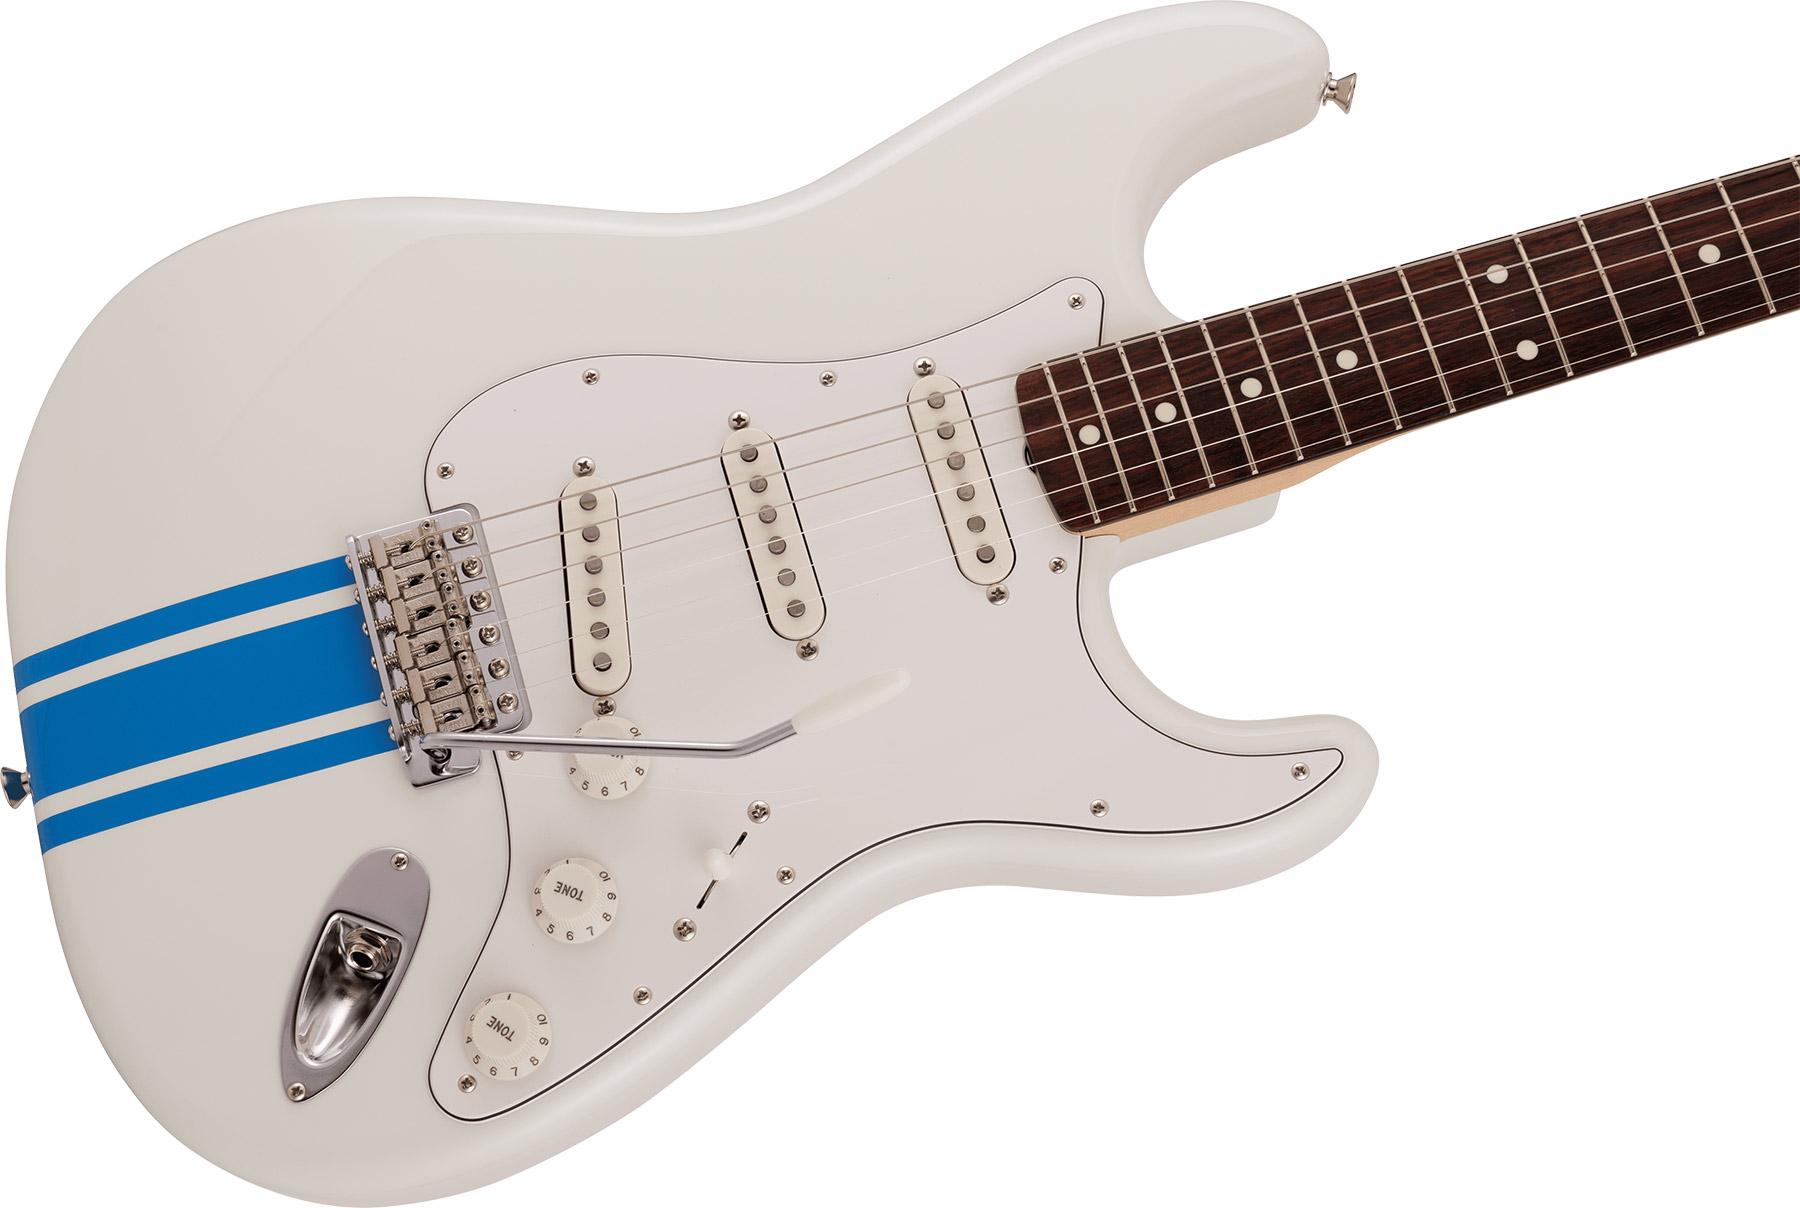 Fender Strat Traditional 60s Mij Jap 3s Trem Rw - Olympic White W/ Blue Competition Stripe - Str shape electric guitar - Variation 2